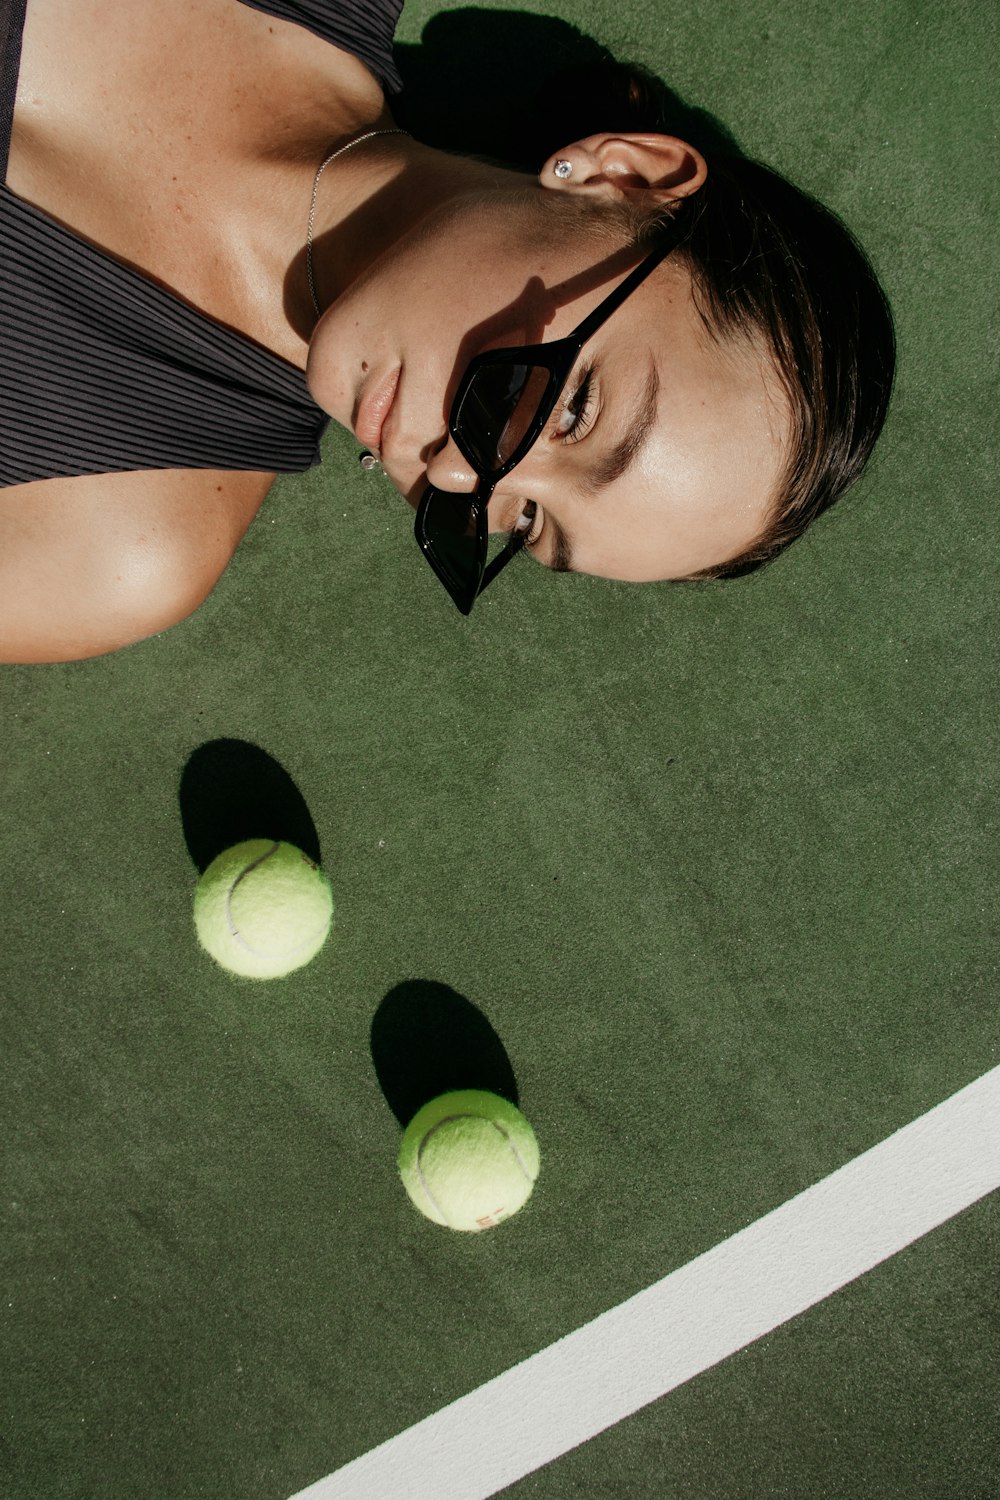 woman lying beside two green tennis balls